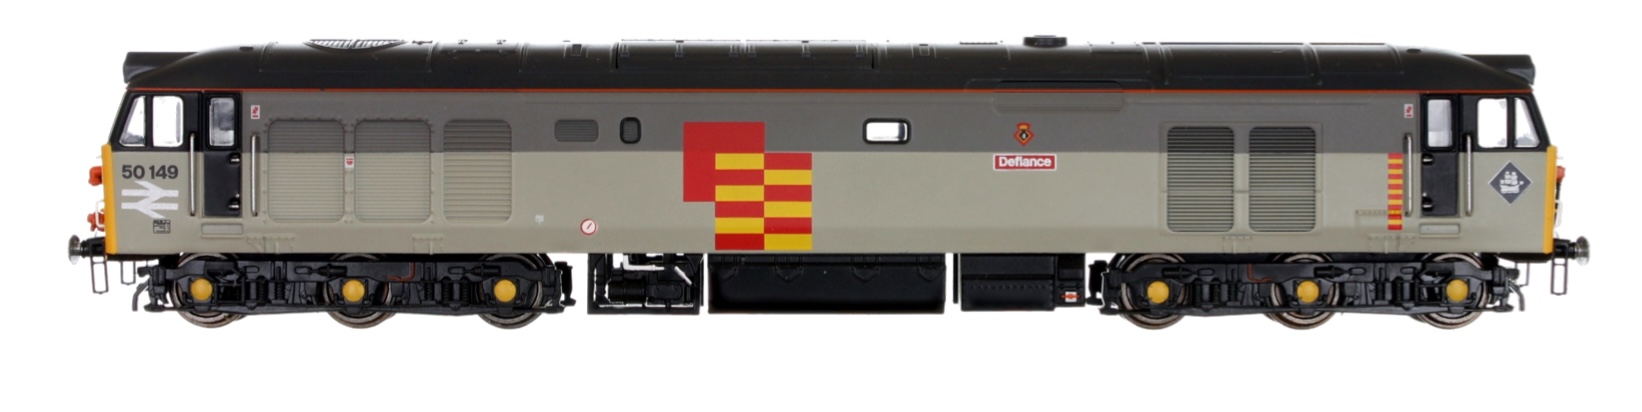 N Scale - Dapol - 2D-002-005 - Locomotive, Diesel, BR, Class 50 - British Rail - 50149